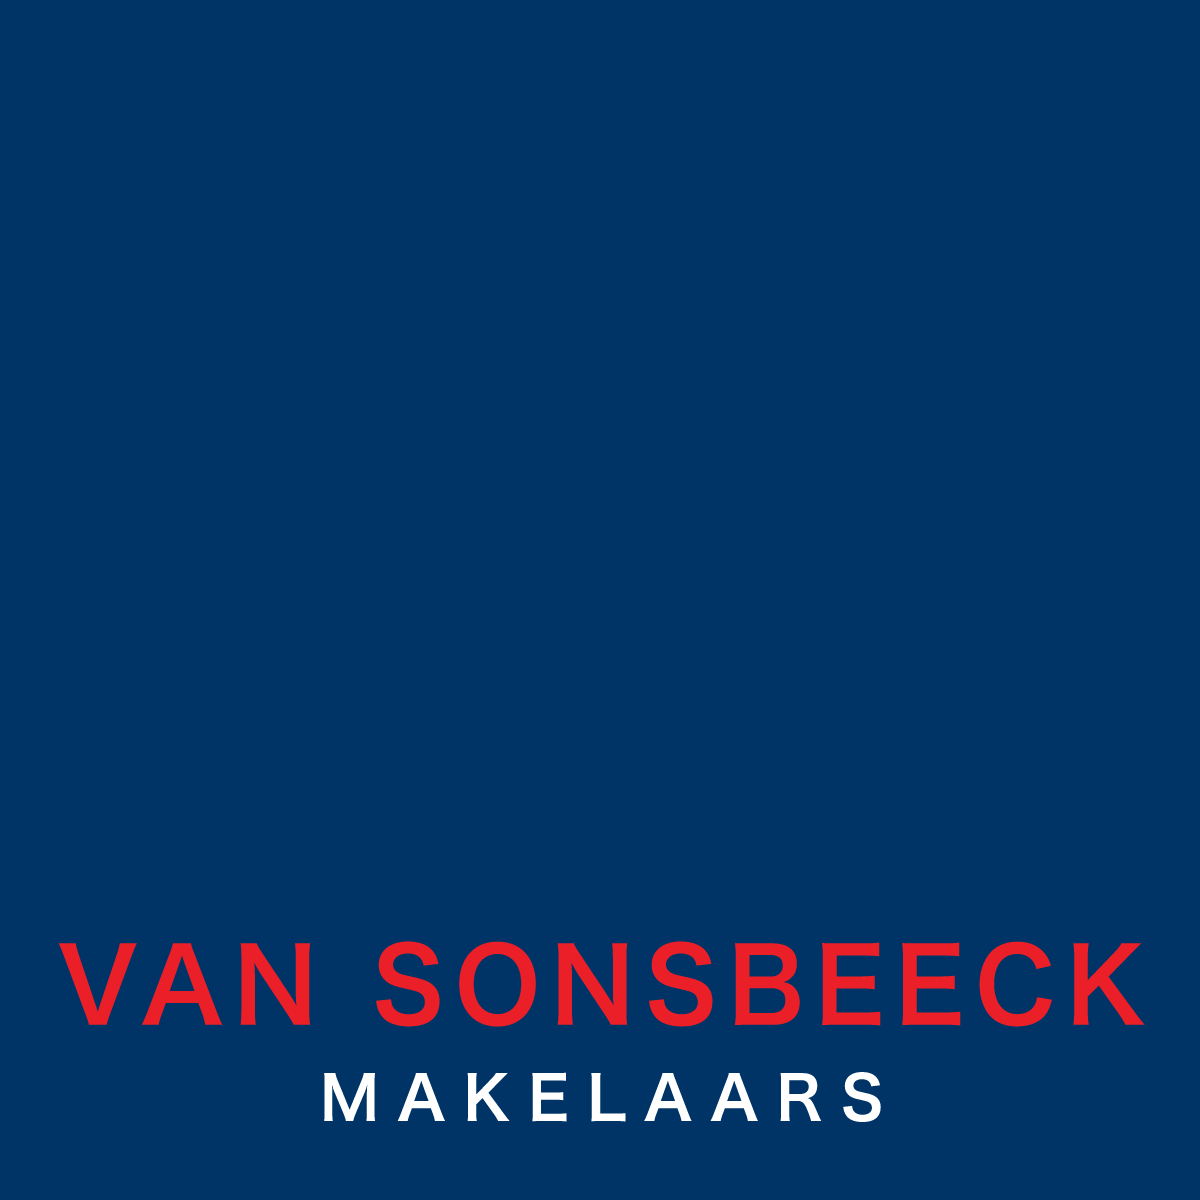 Van Sonsbeeck makelaars